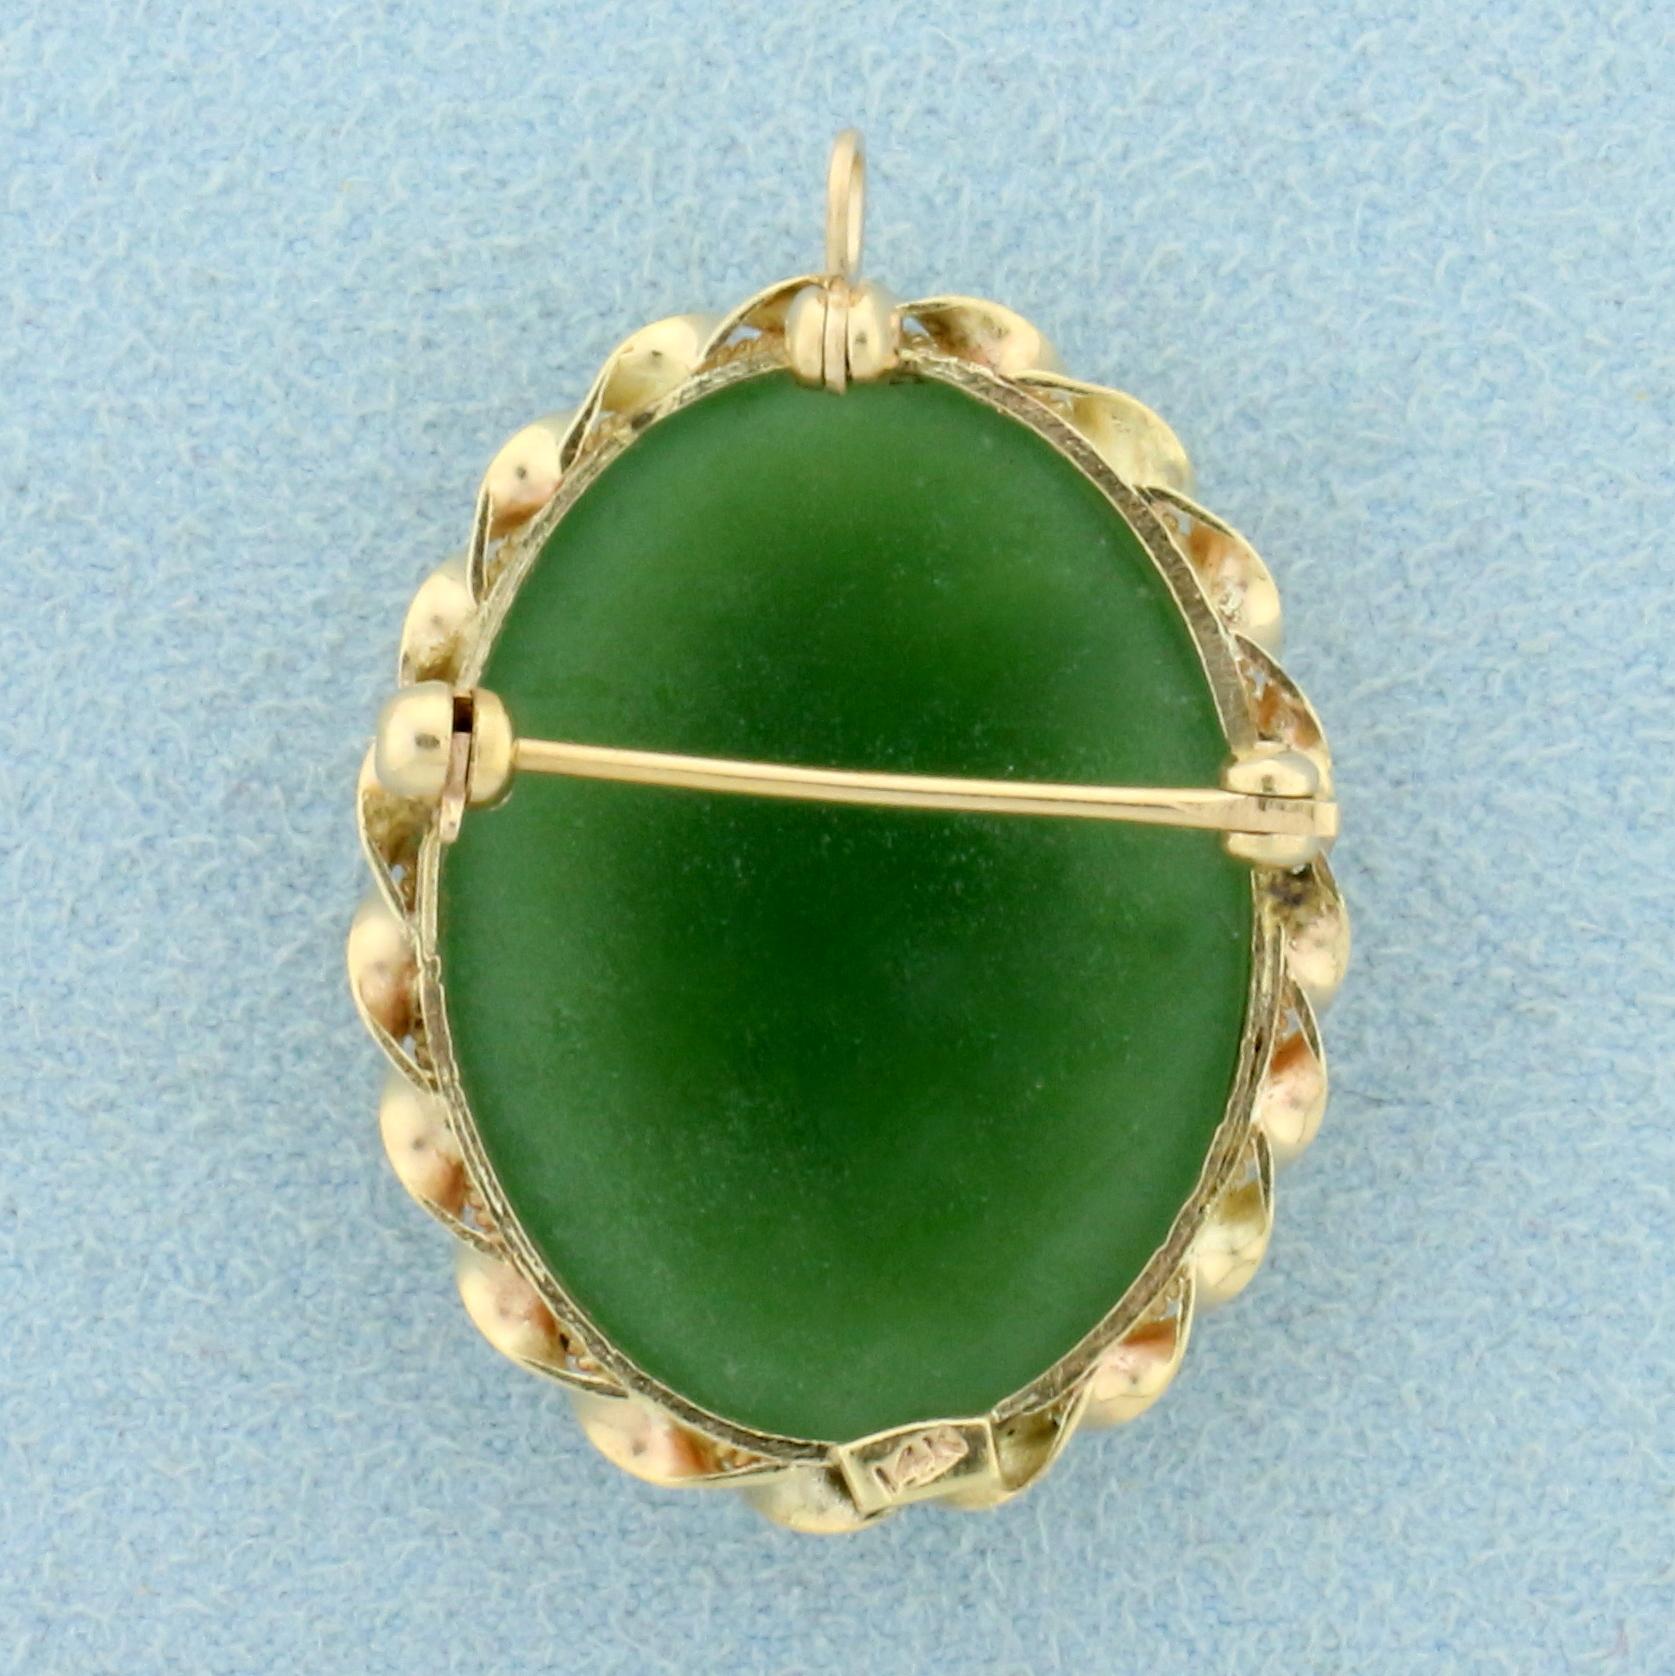 18ct Jade Pendant Or Pin In 14k Yellow Gold